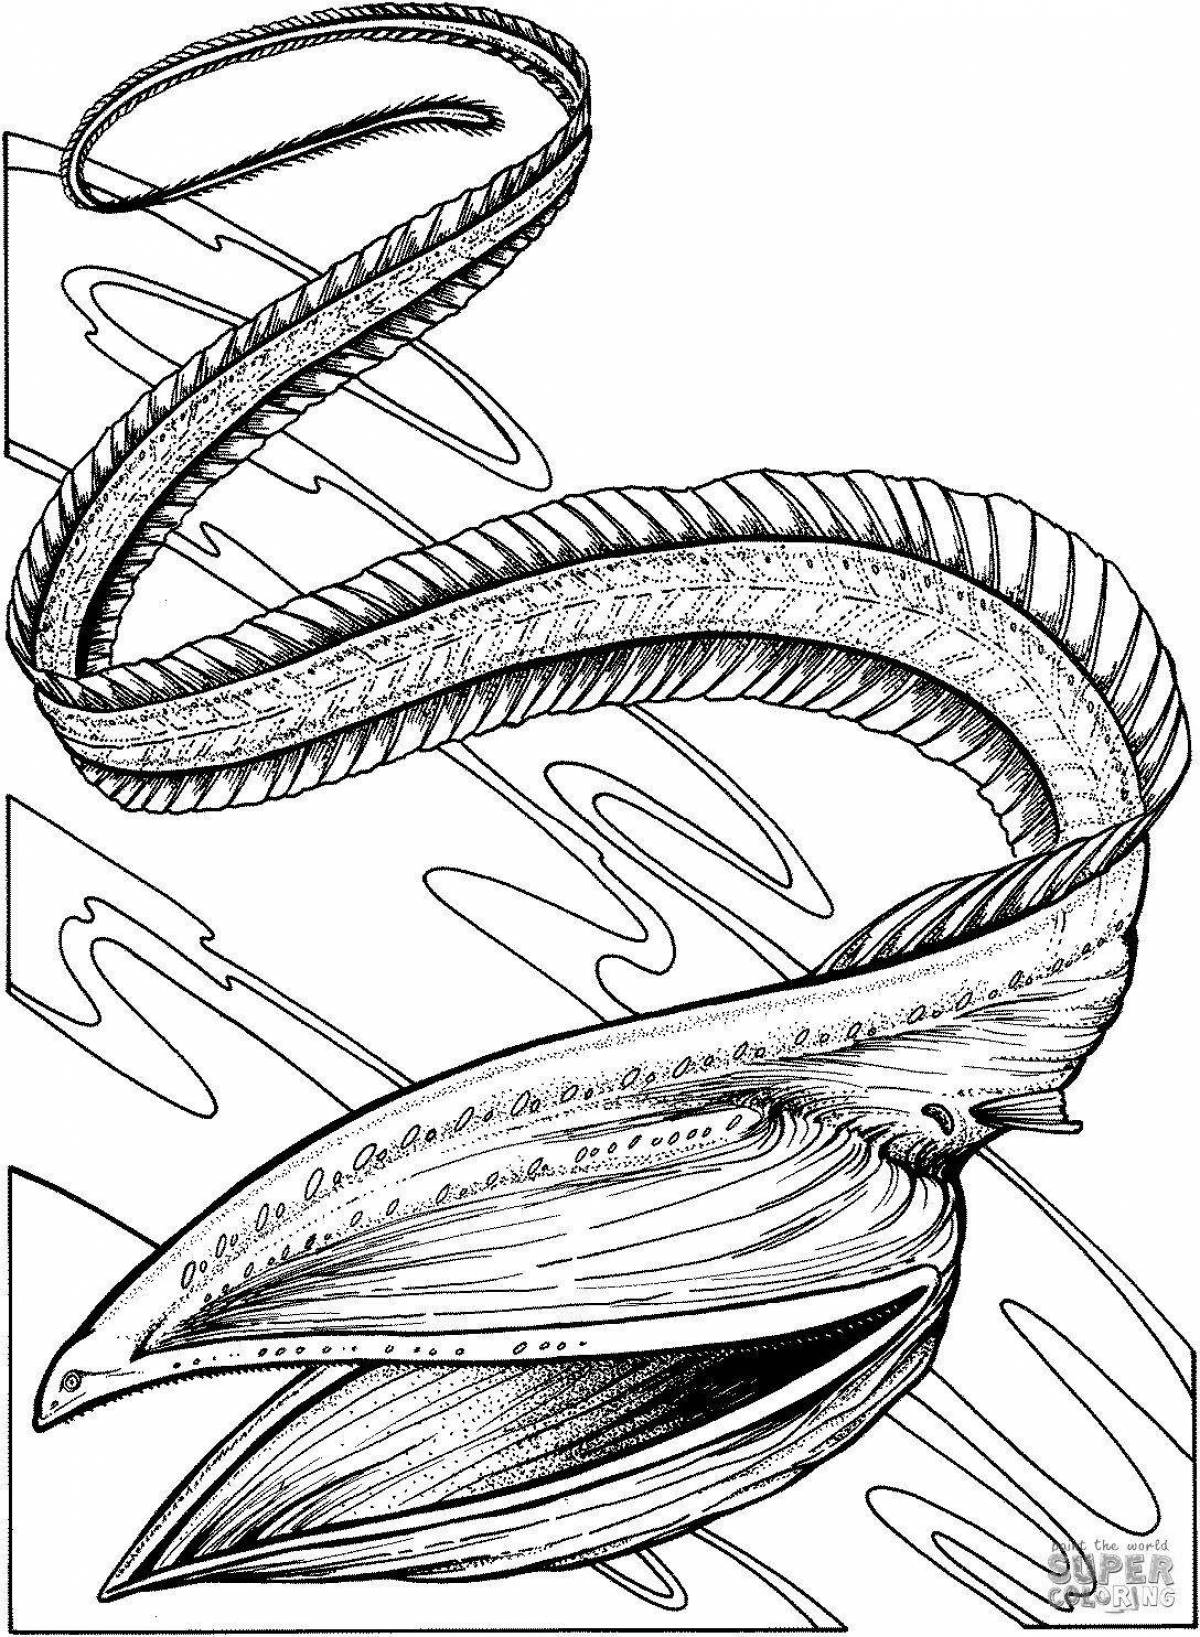 Exotic moray eel coloring page